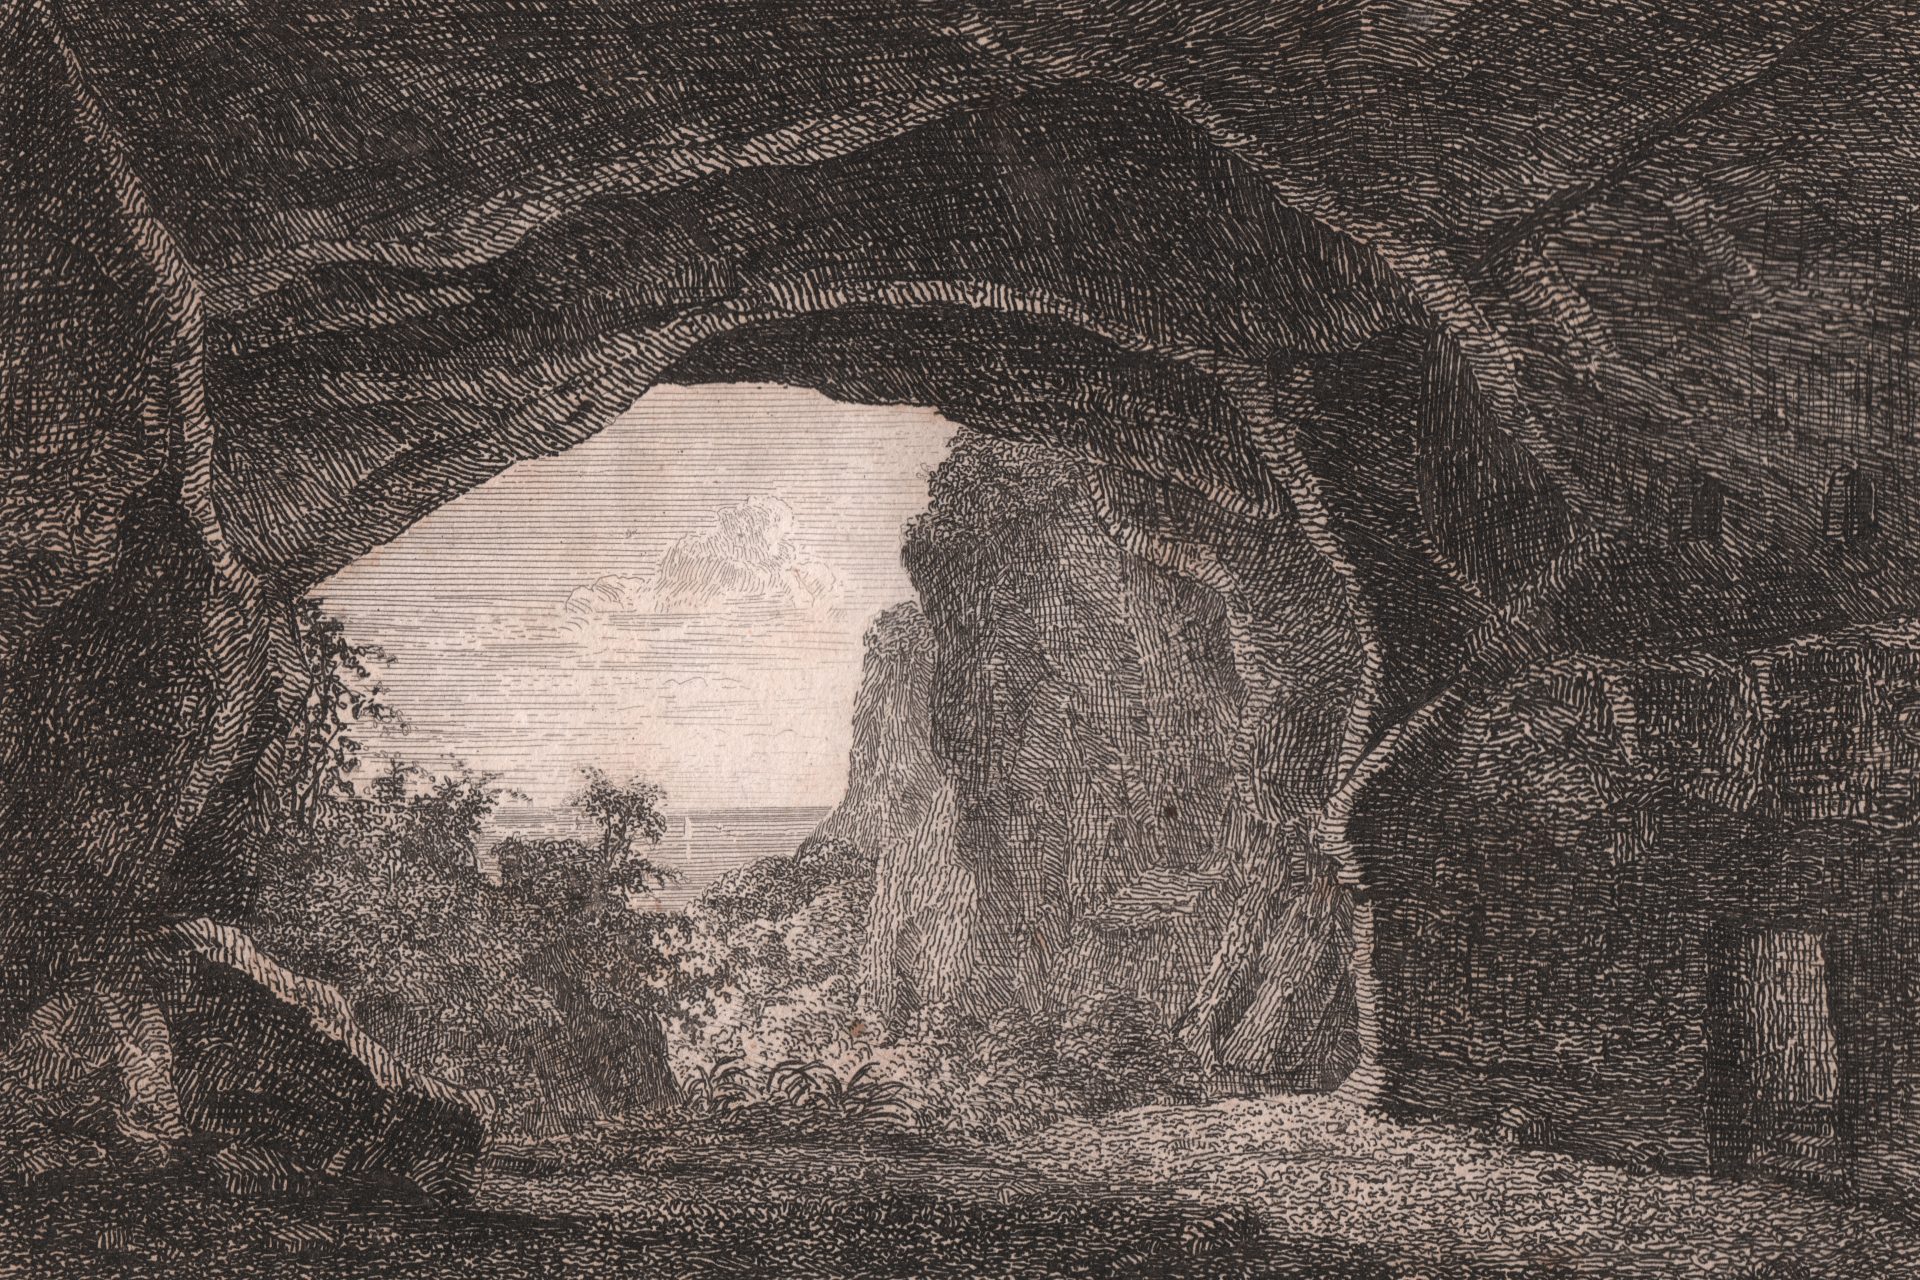 ​Cueva de Sibilia (Nápoles, Italia)